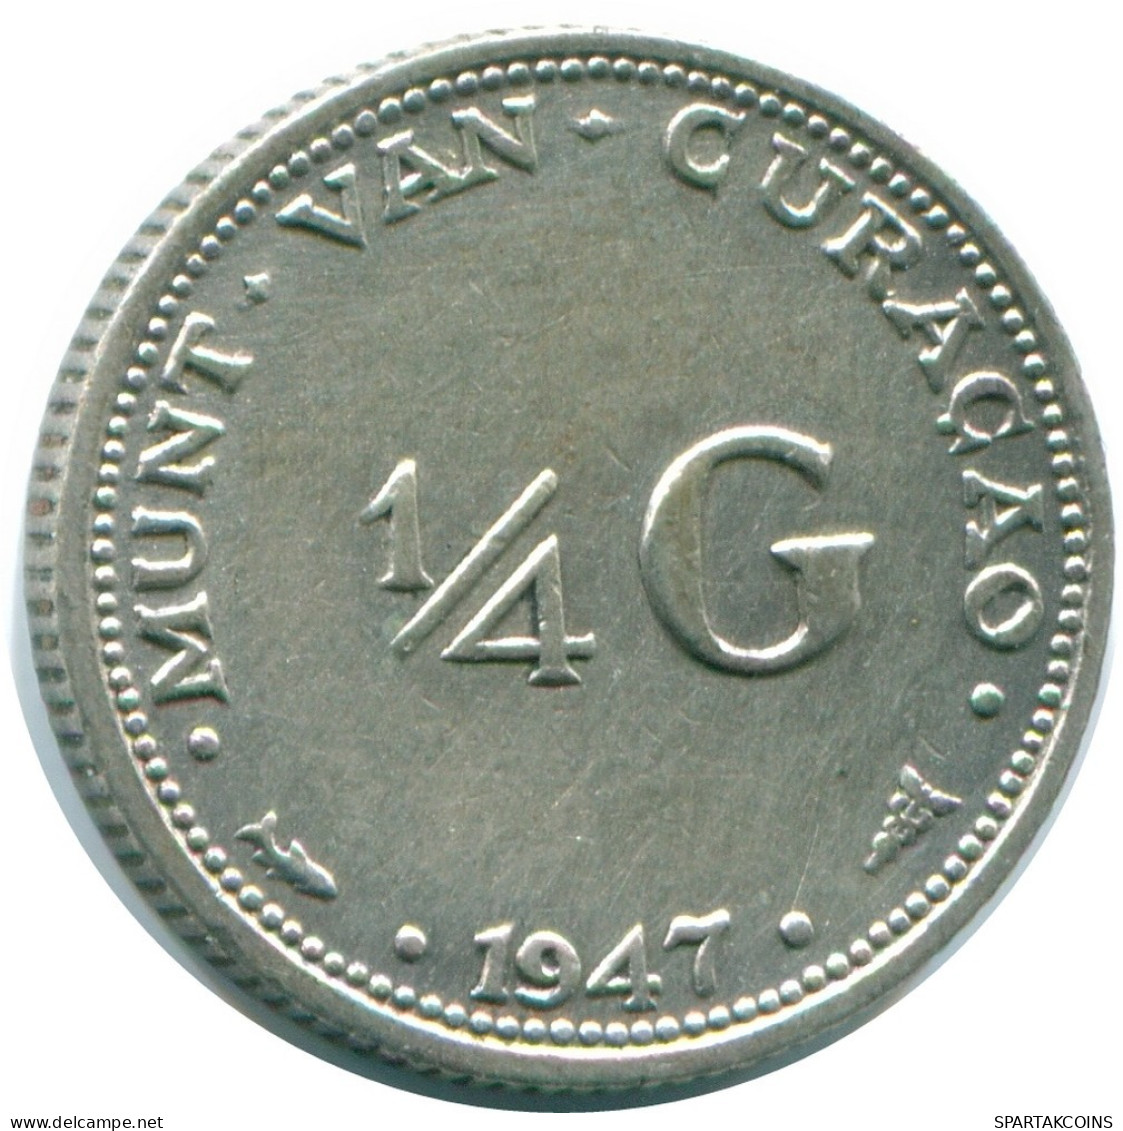 1/4 GULDEN 1947 CURACAO Netherlands SILVER Colonial Coin #NL10762.4.U.A - Curaçao